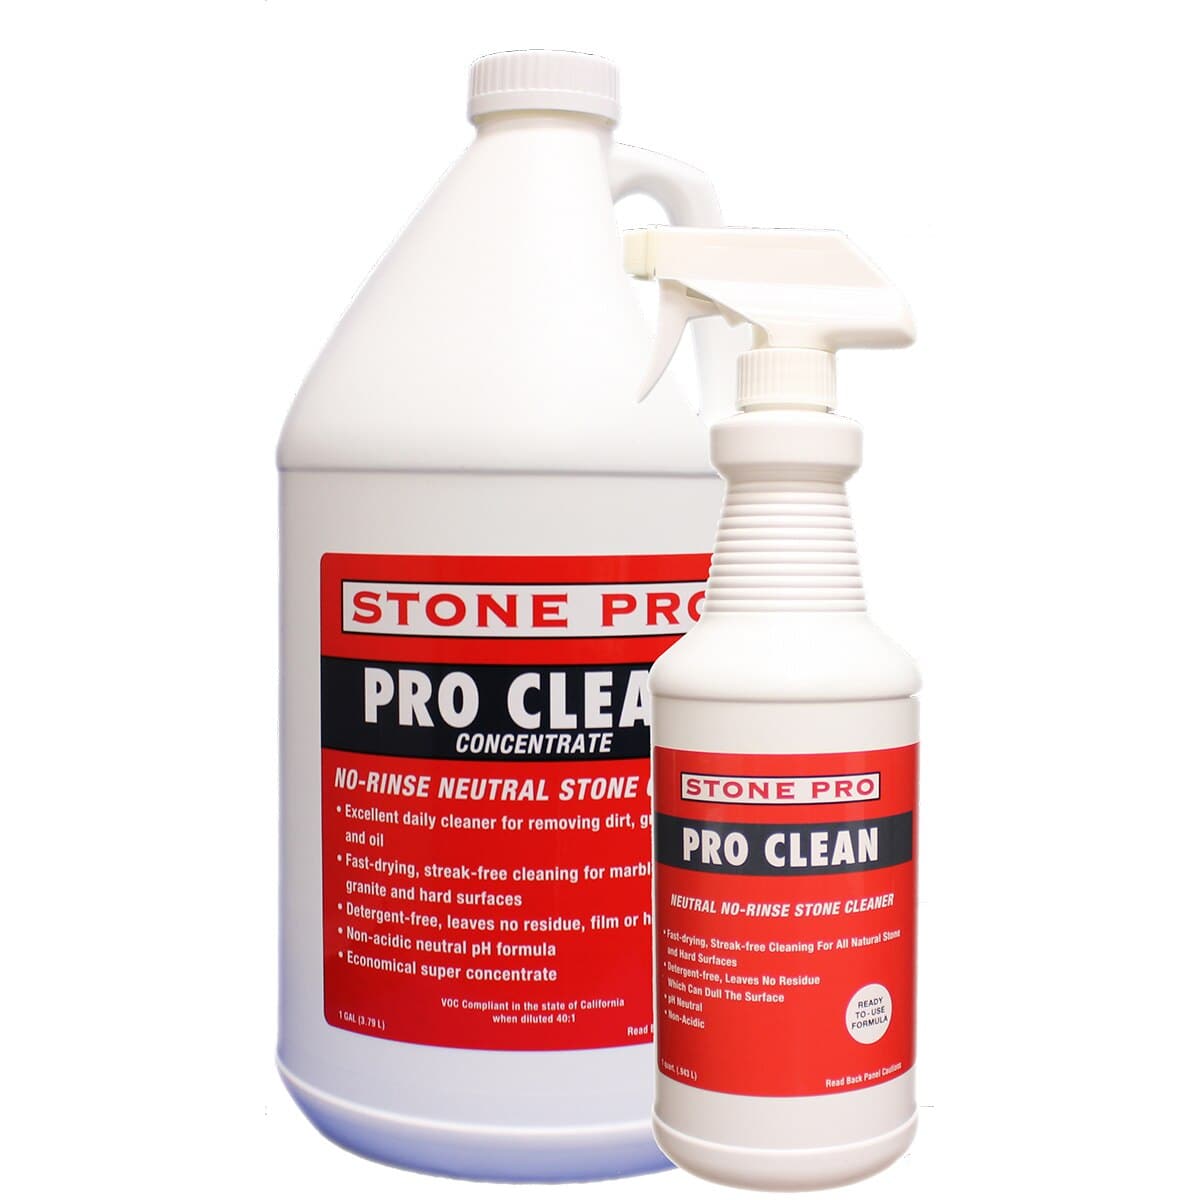 Stone Pro Pro Clean (Concentrate) - Stone Pro